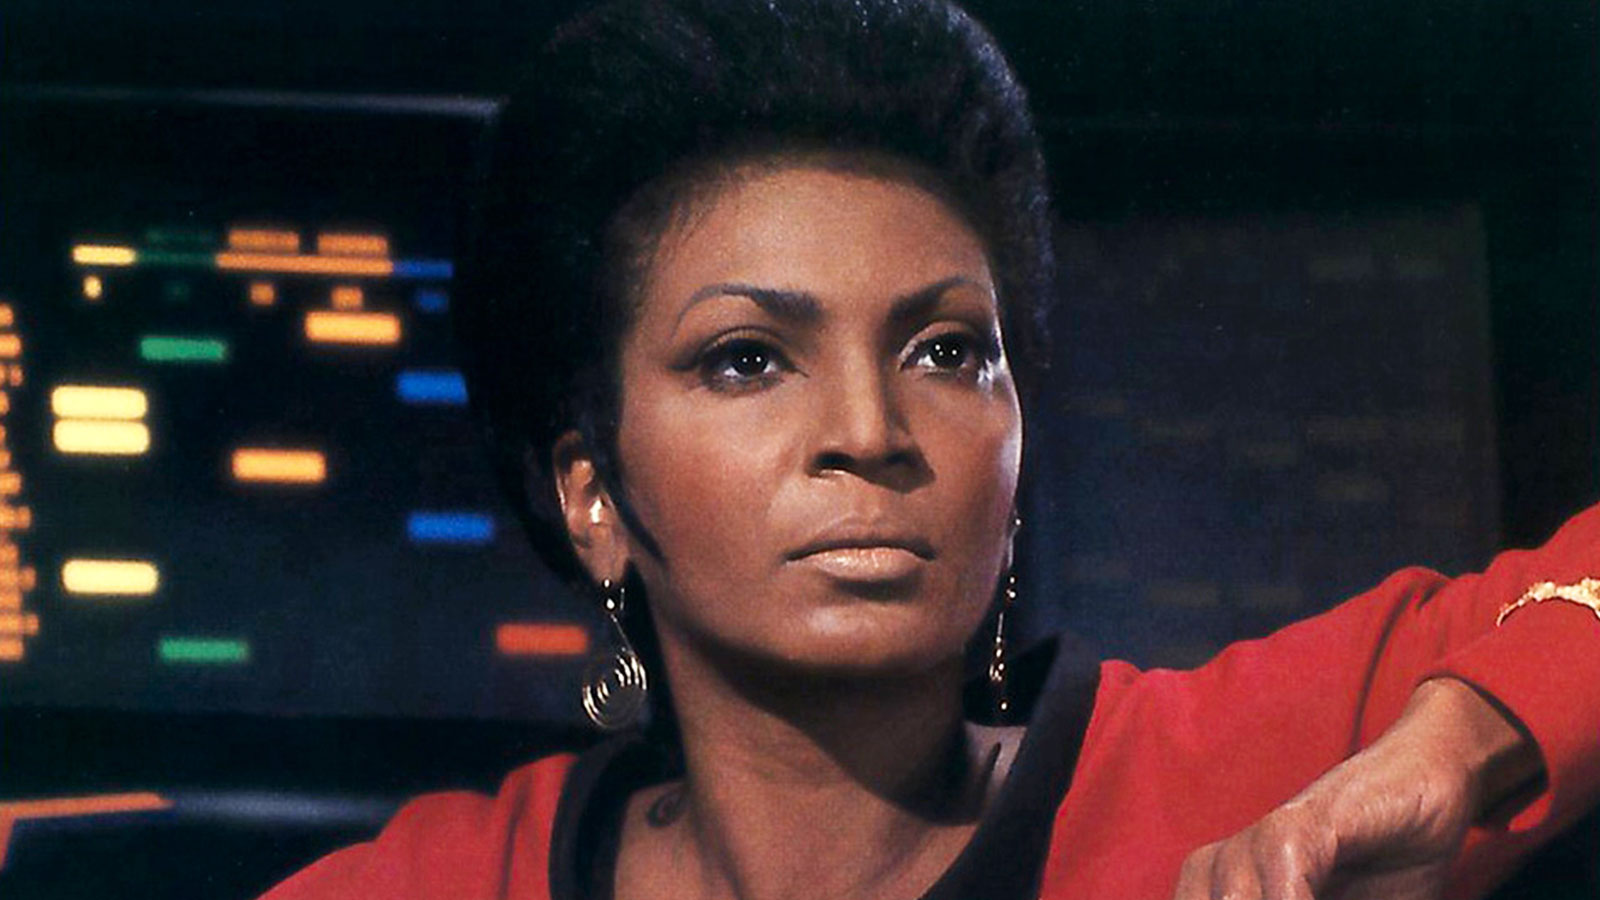 Nichelle Nichols, TV pioneer and Star Trek’s original Uhura, dies at 89